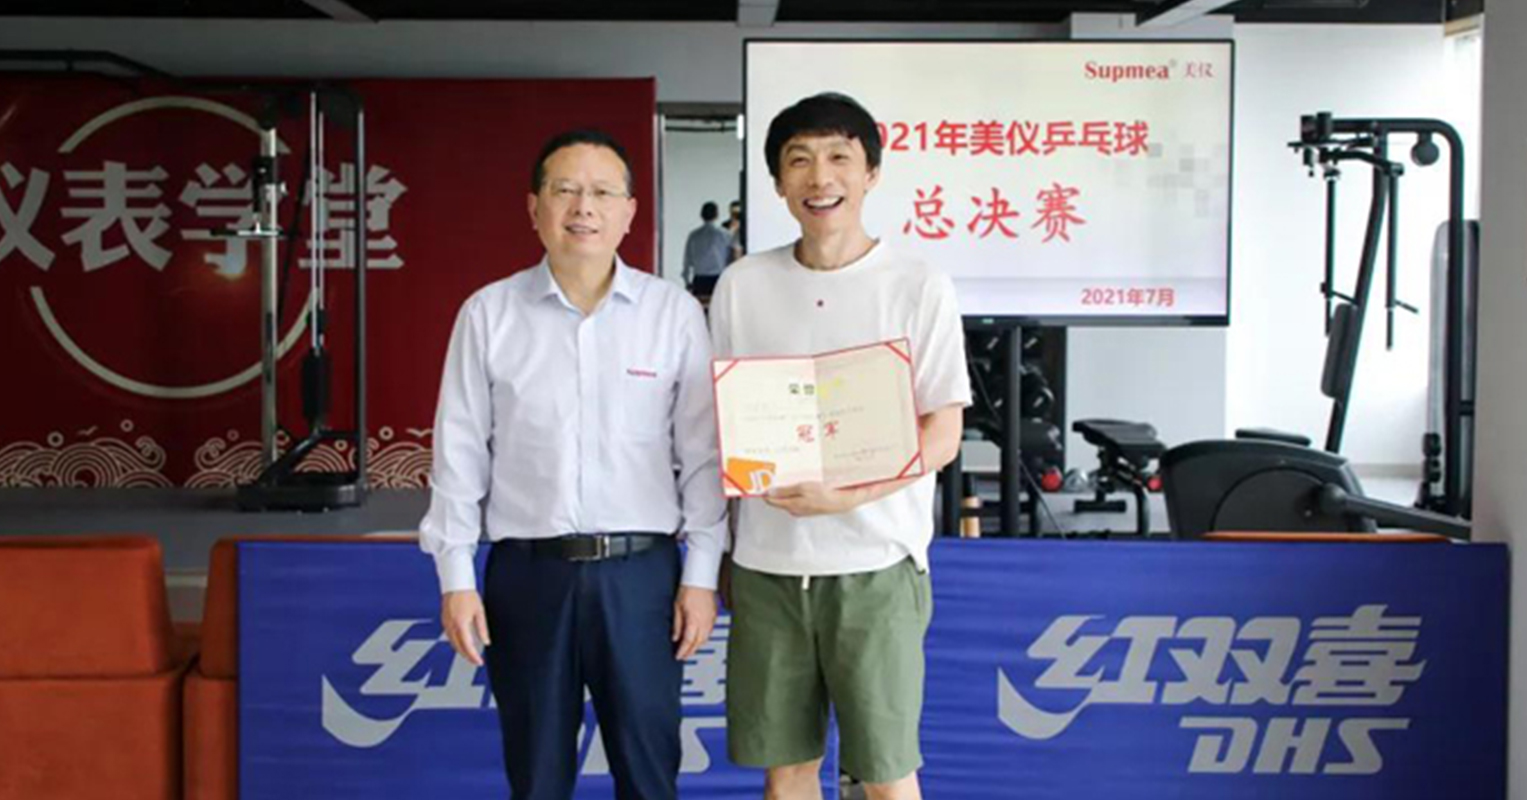 Sinomeasure senior media consultant Dr. Jiao won the table tennis championship